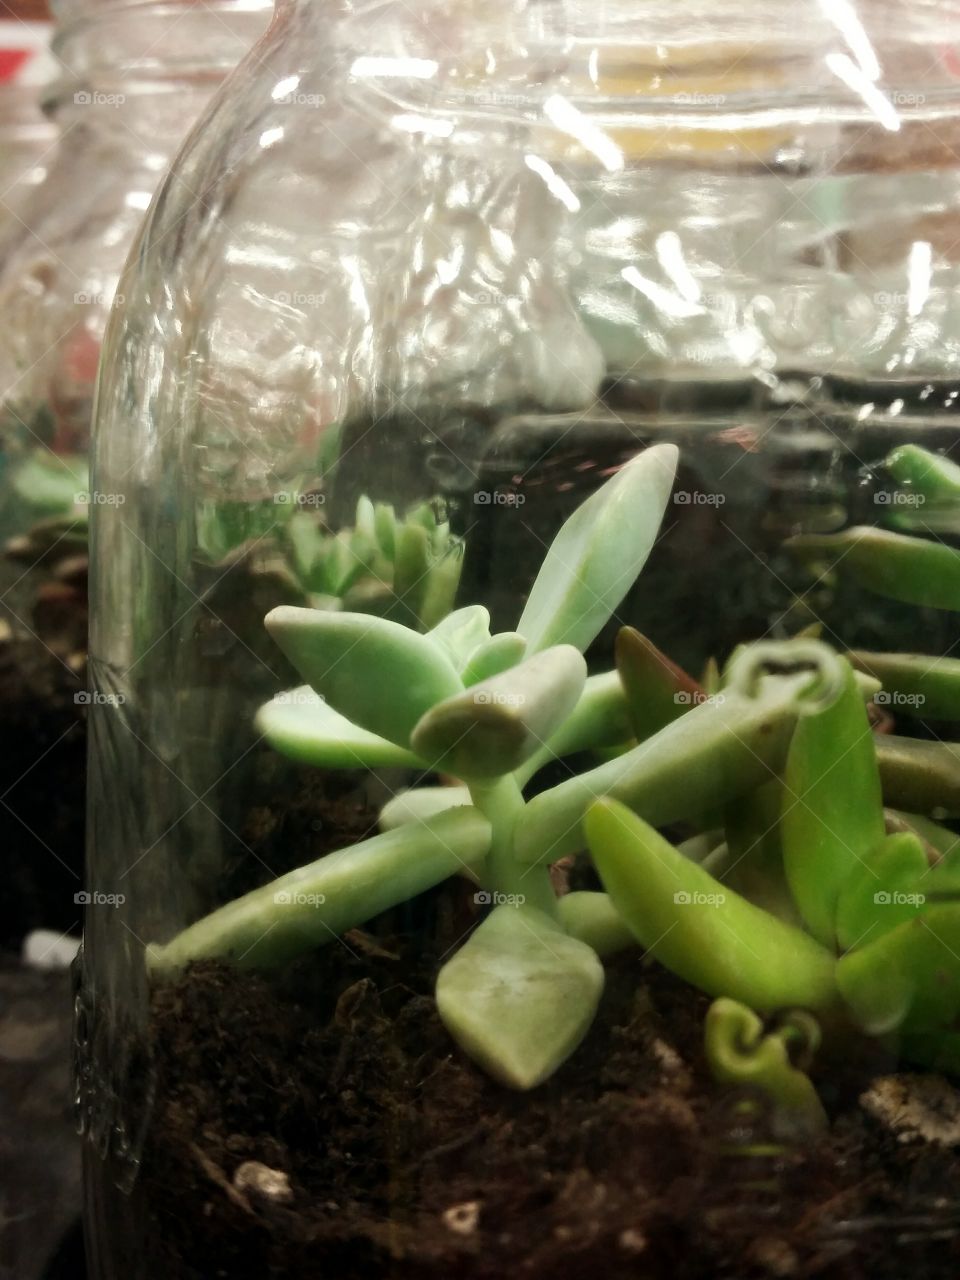 Plants in a Jar